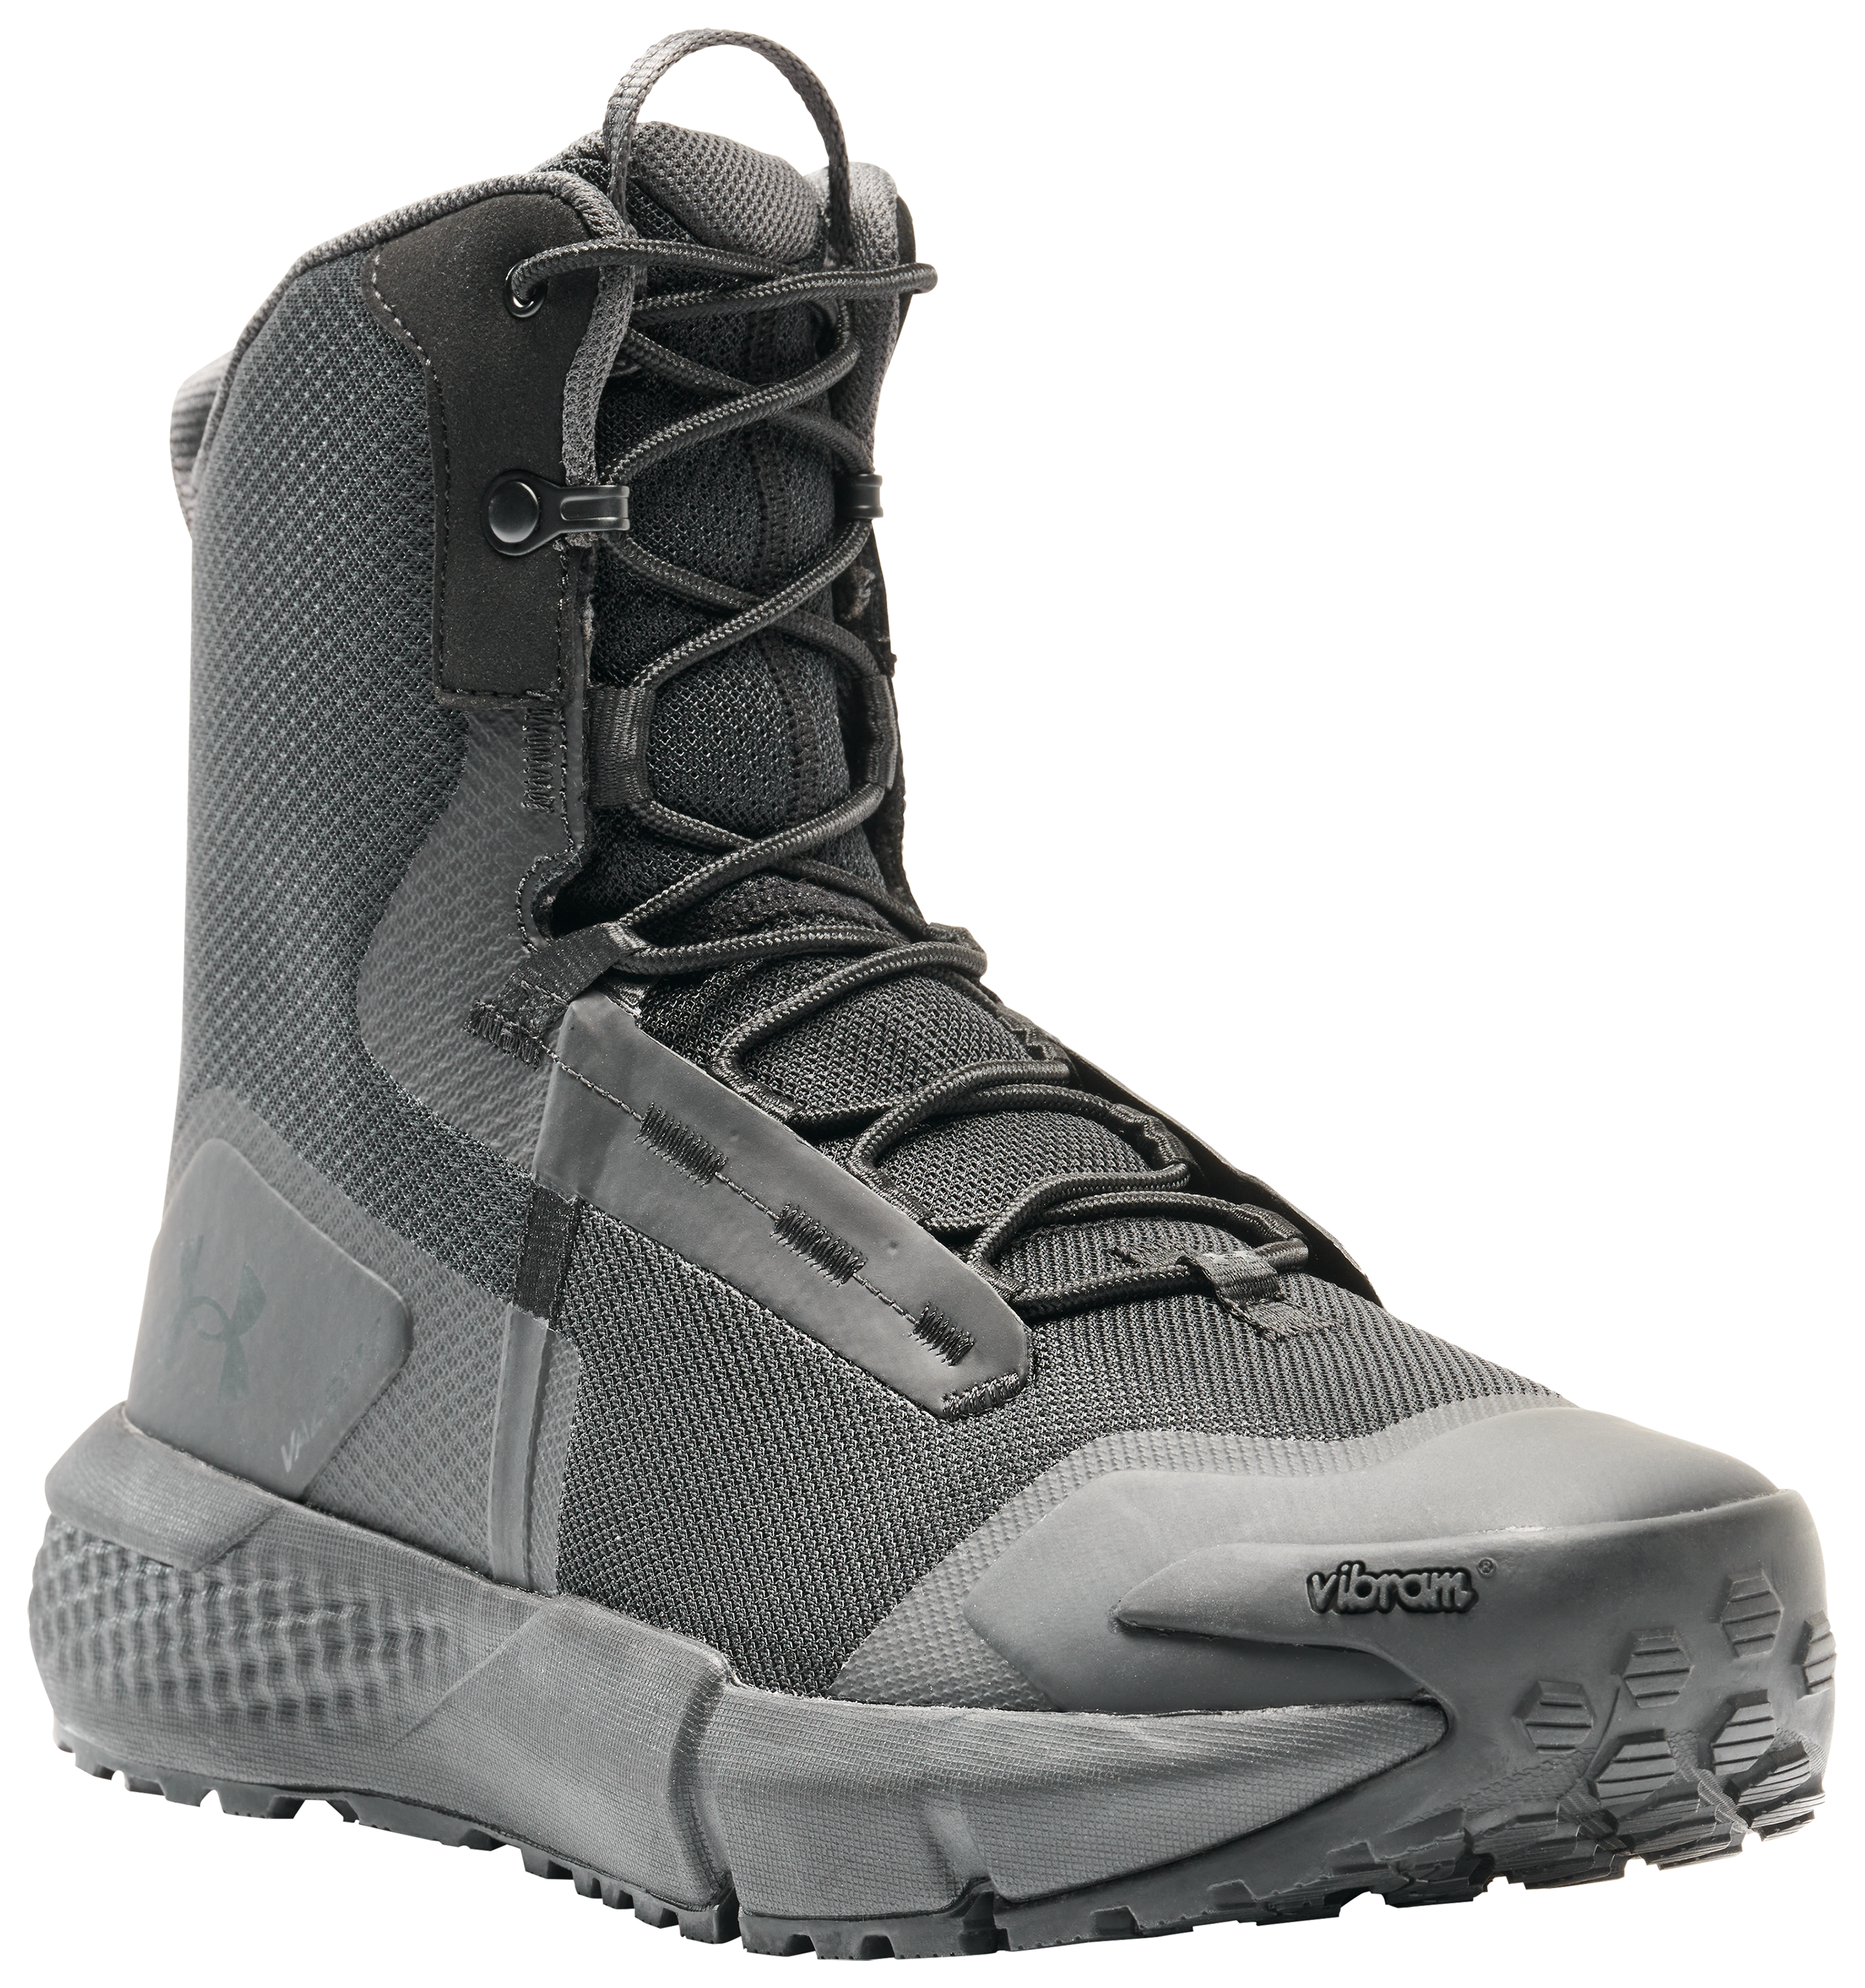 Under Armour Valsetz Side Zip Tactical Boots for Men - Black - 8.5M